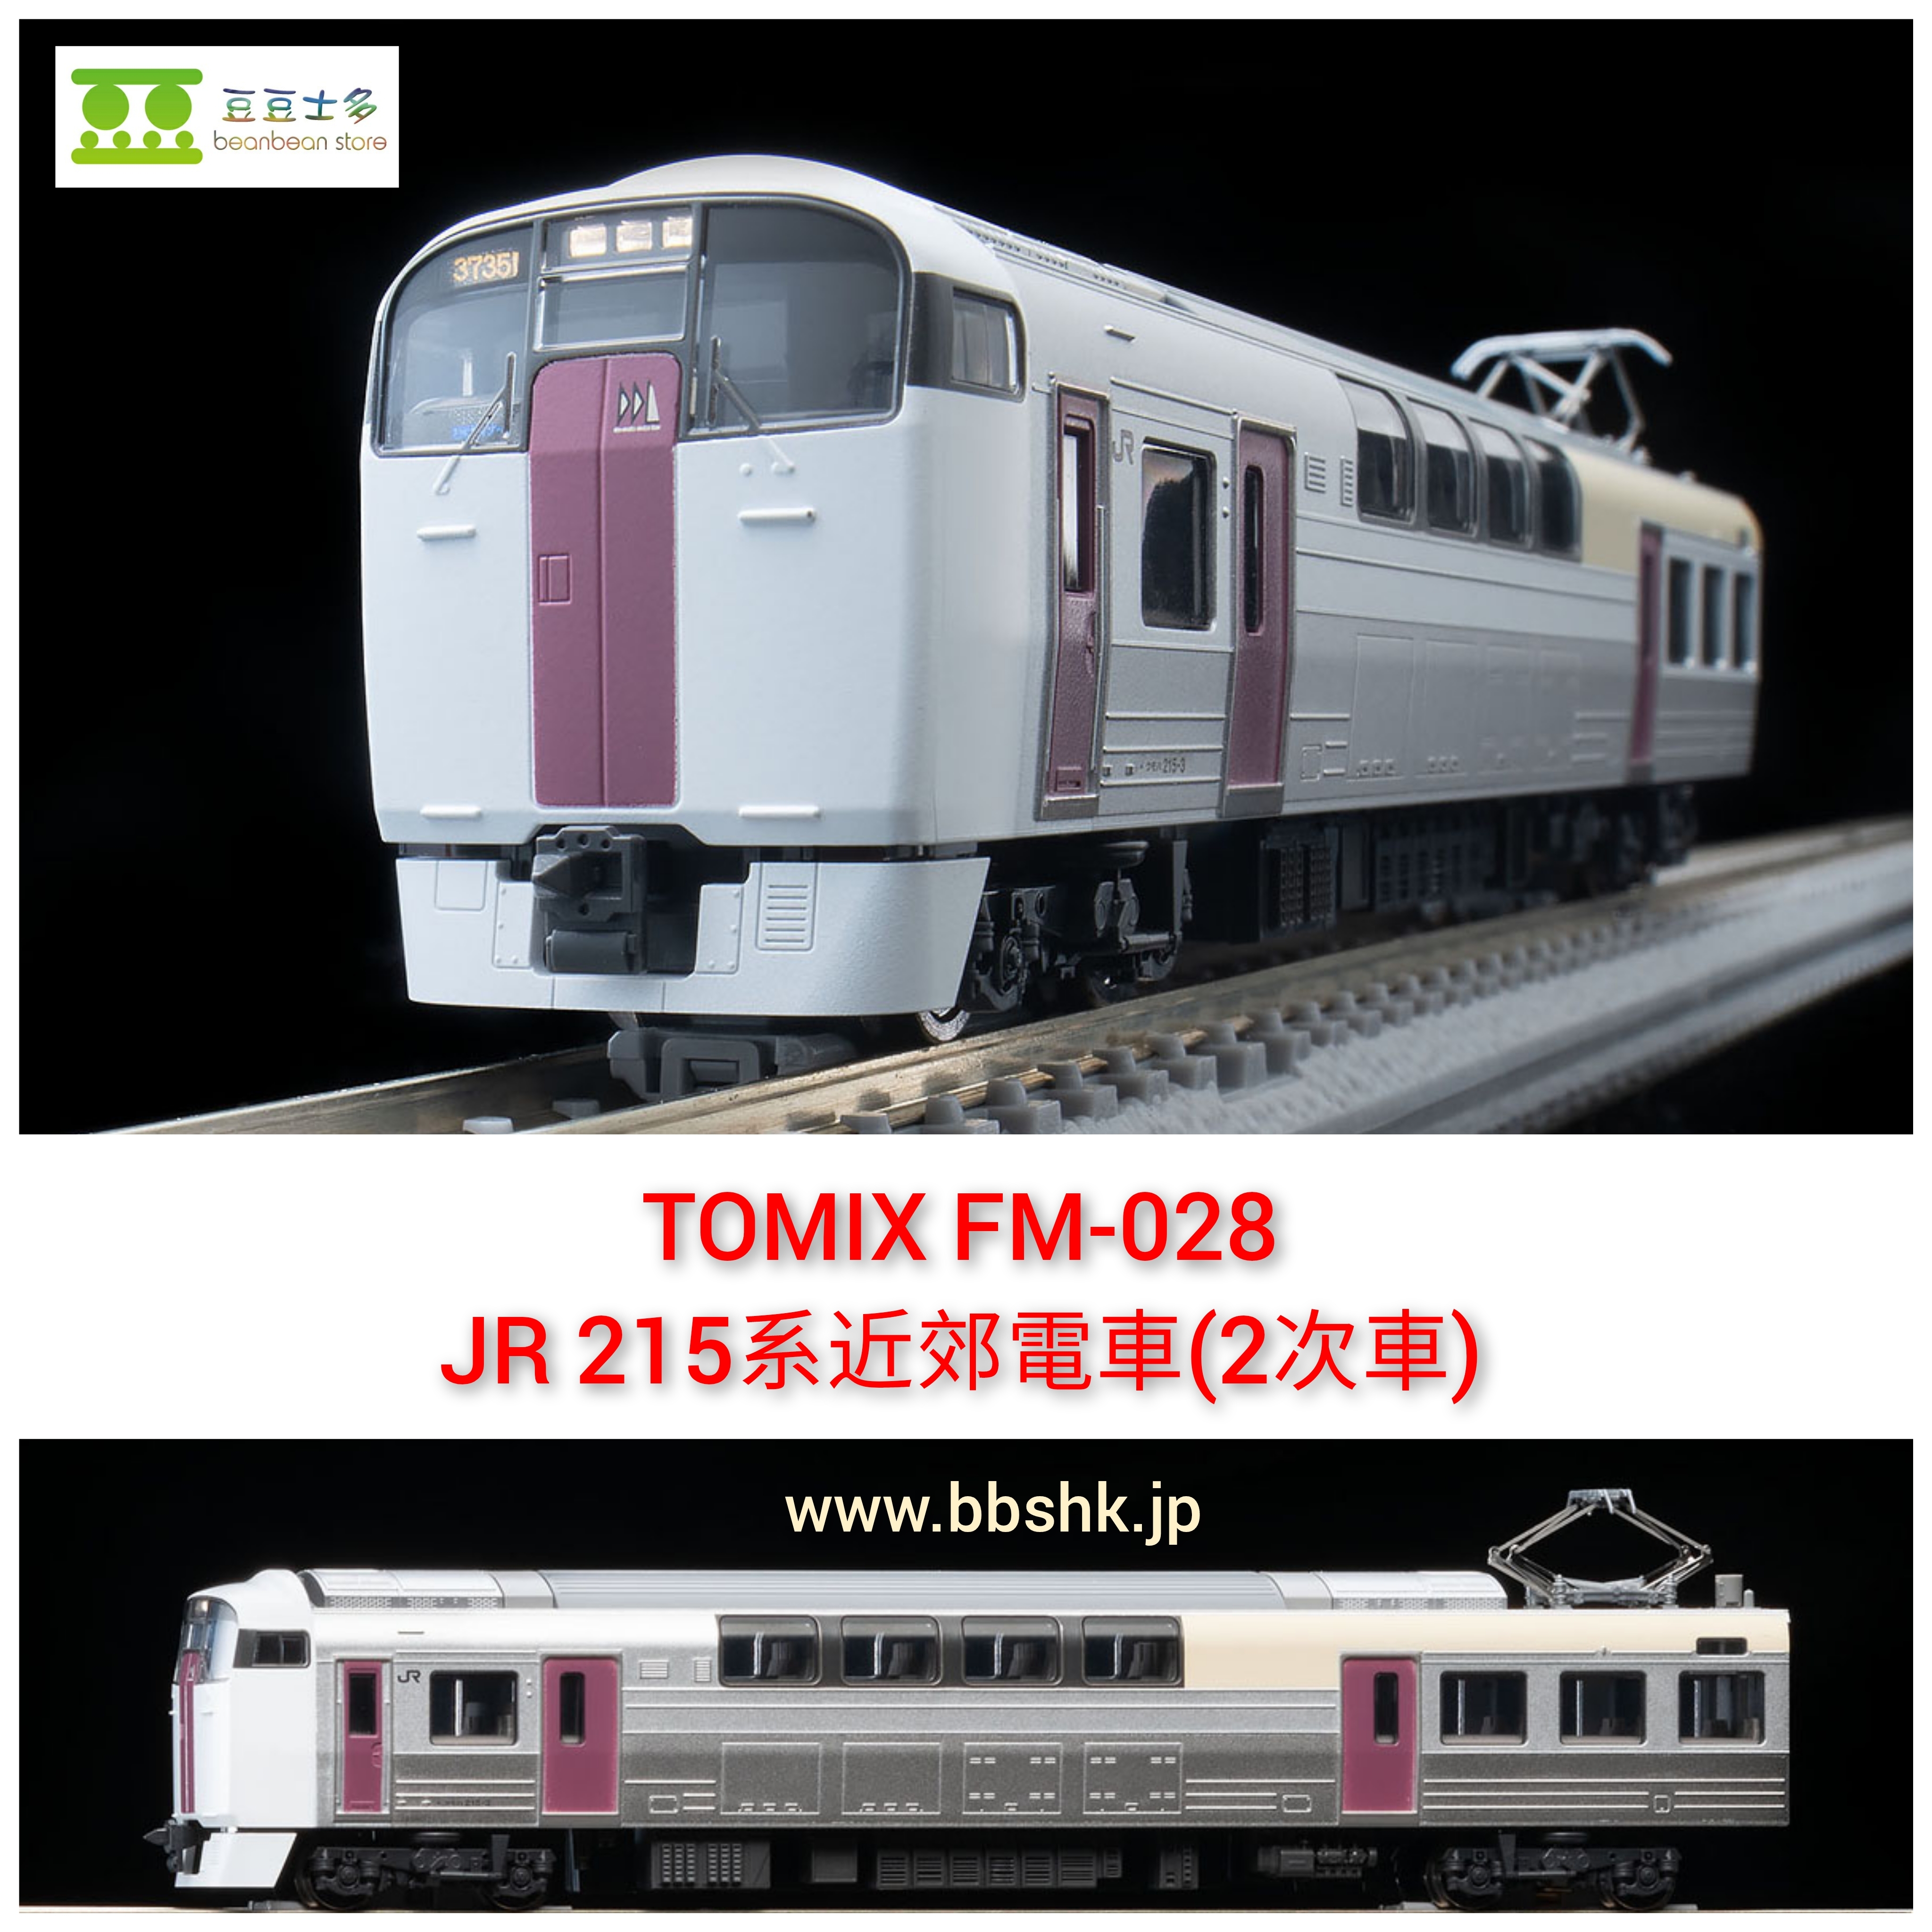 TOMIX FM-028 JR 215系近郊電車(2次車)